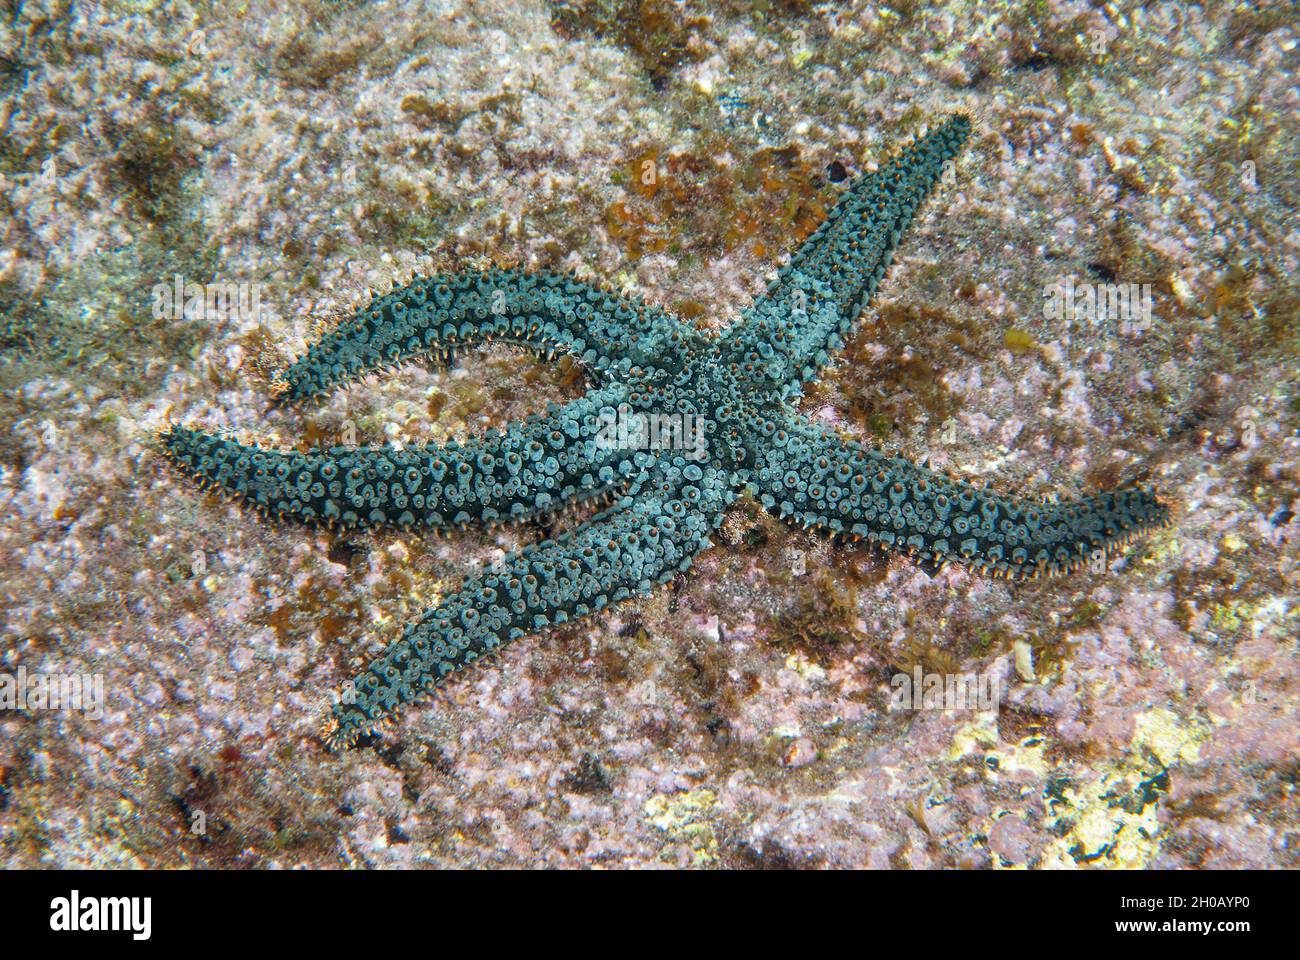 Starfish (Marthasterias glacialis). Marine invertebrates of the Canary Islands, Tenerife. Stock Photo